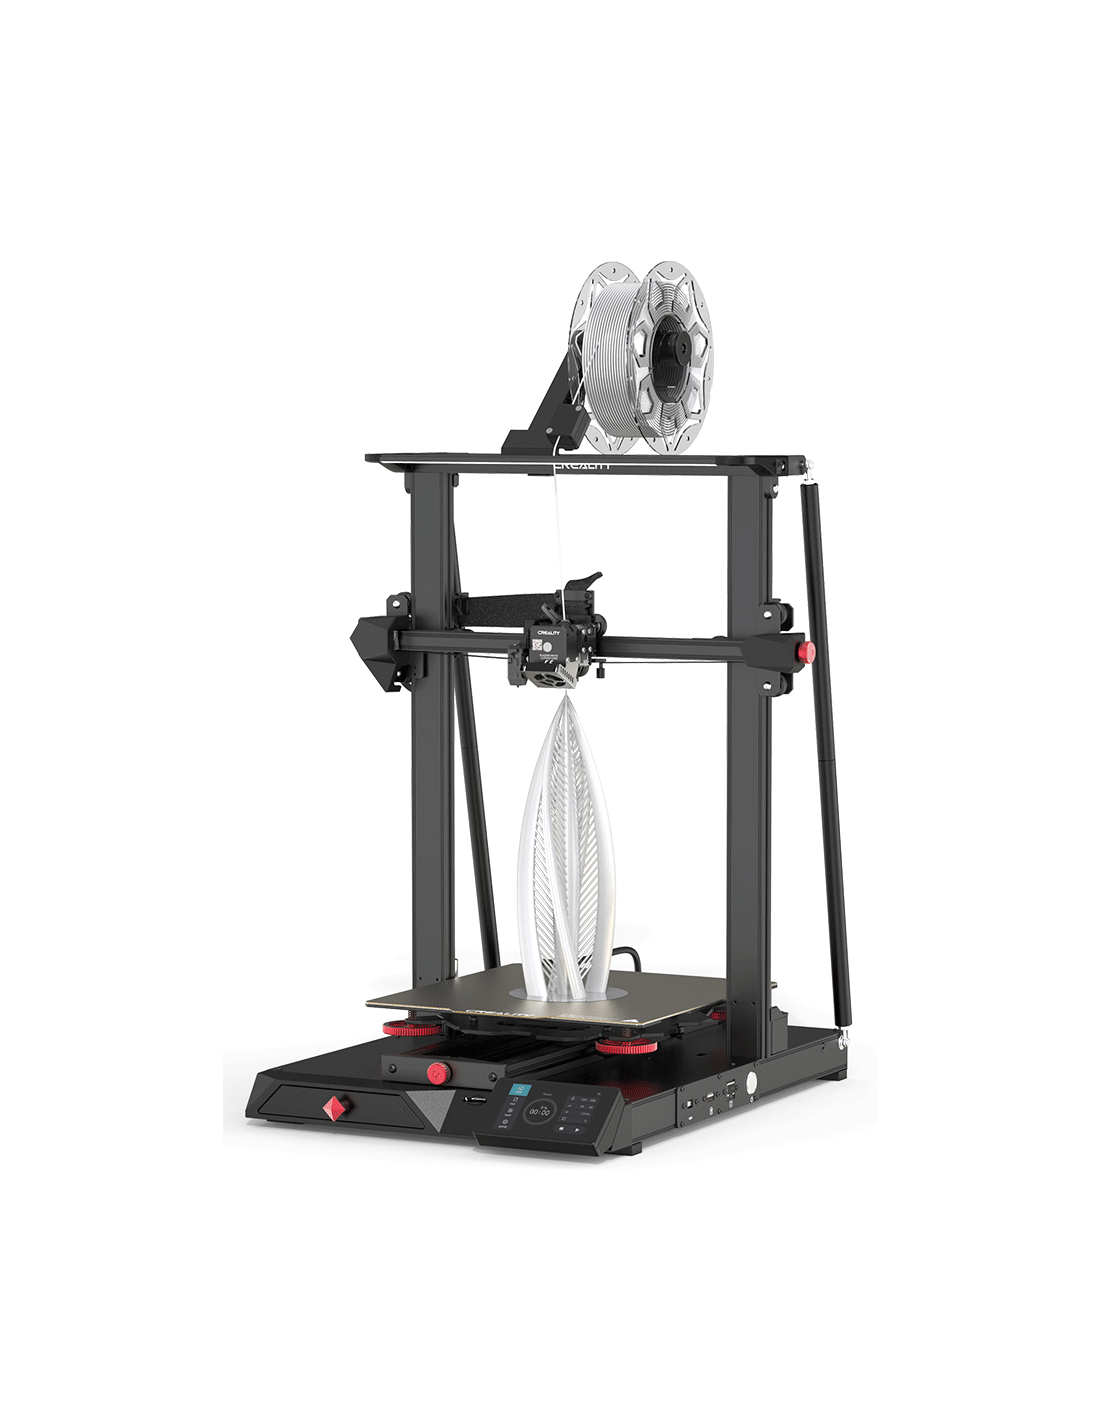 Impressora 3D Creality CR-10 Smart Pro - 30x30x40cm